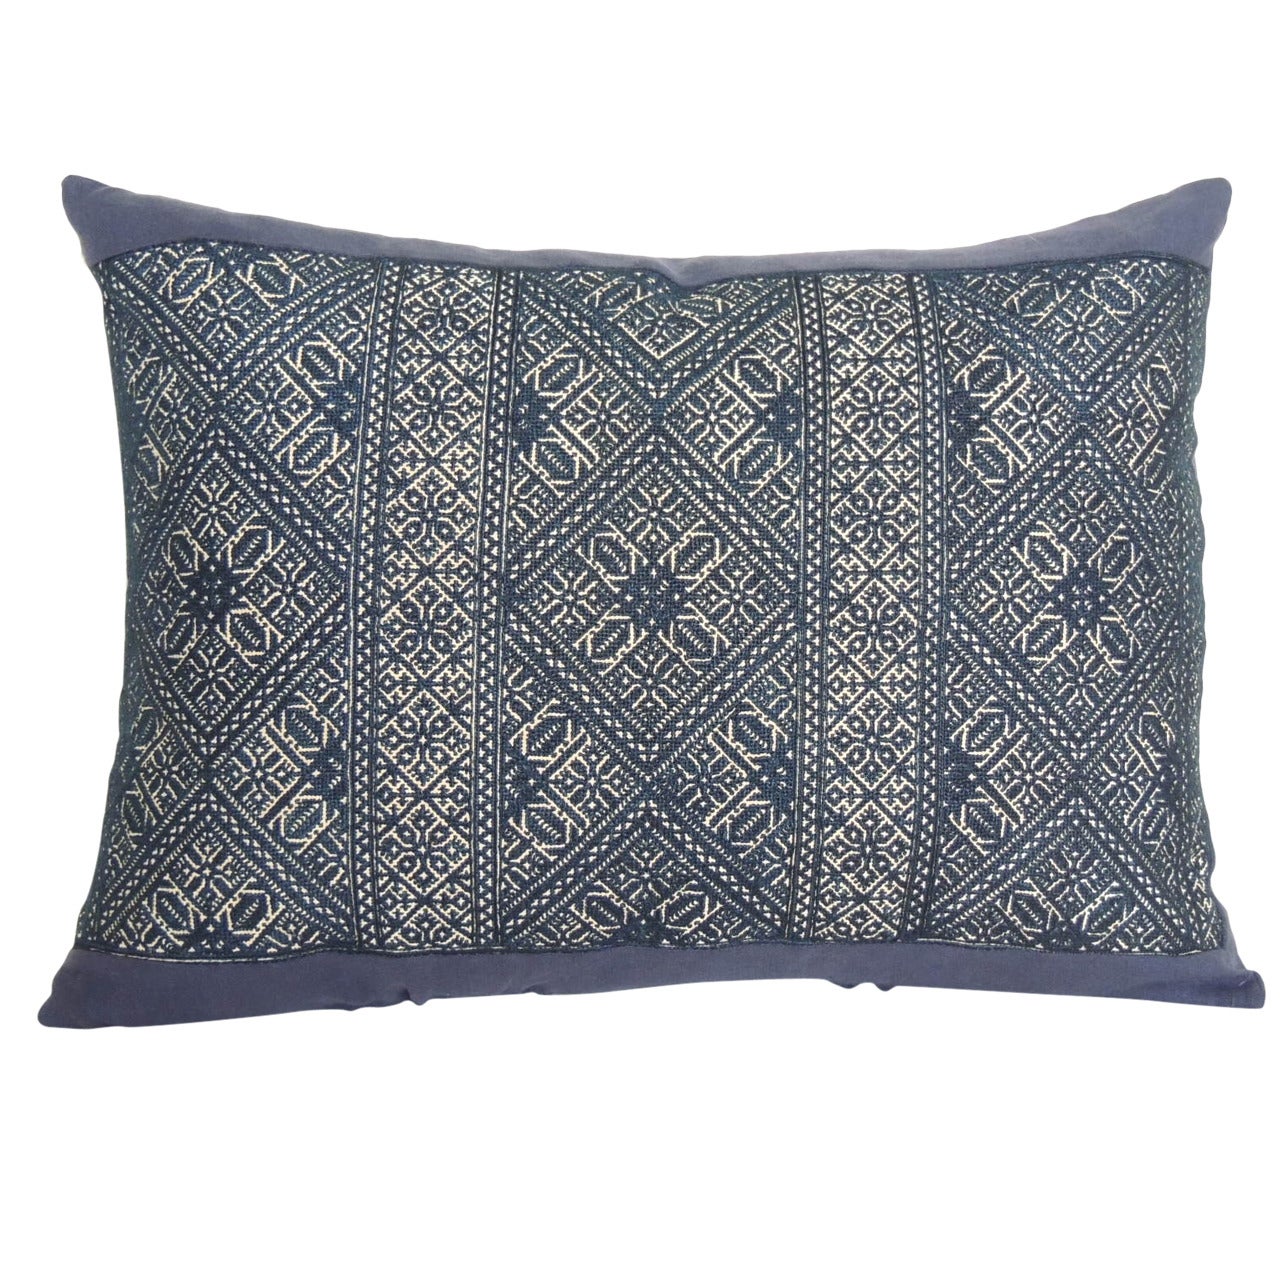 Large Indigo Fez Embroidery Bolster Pillow